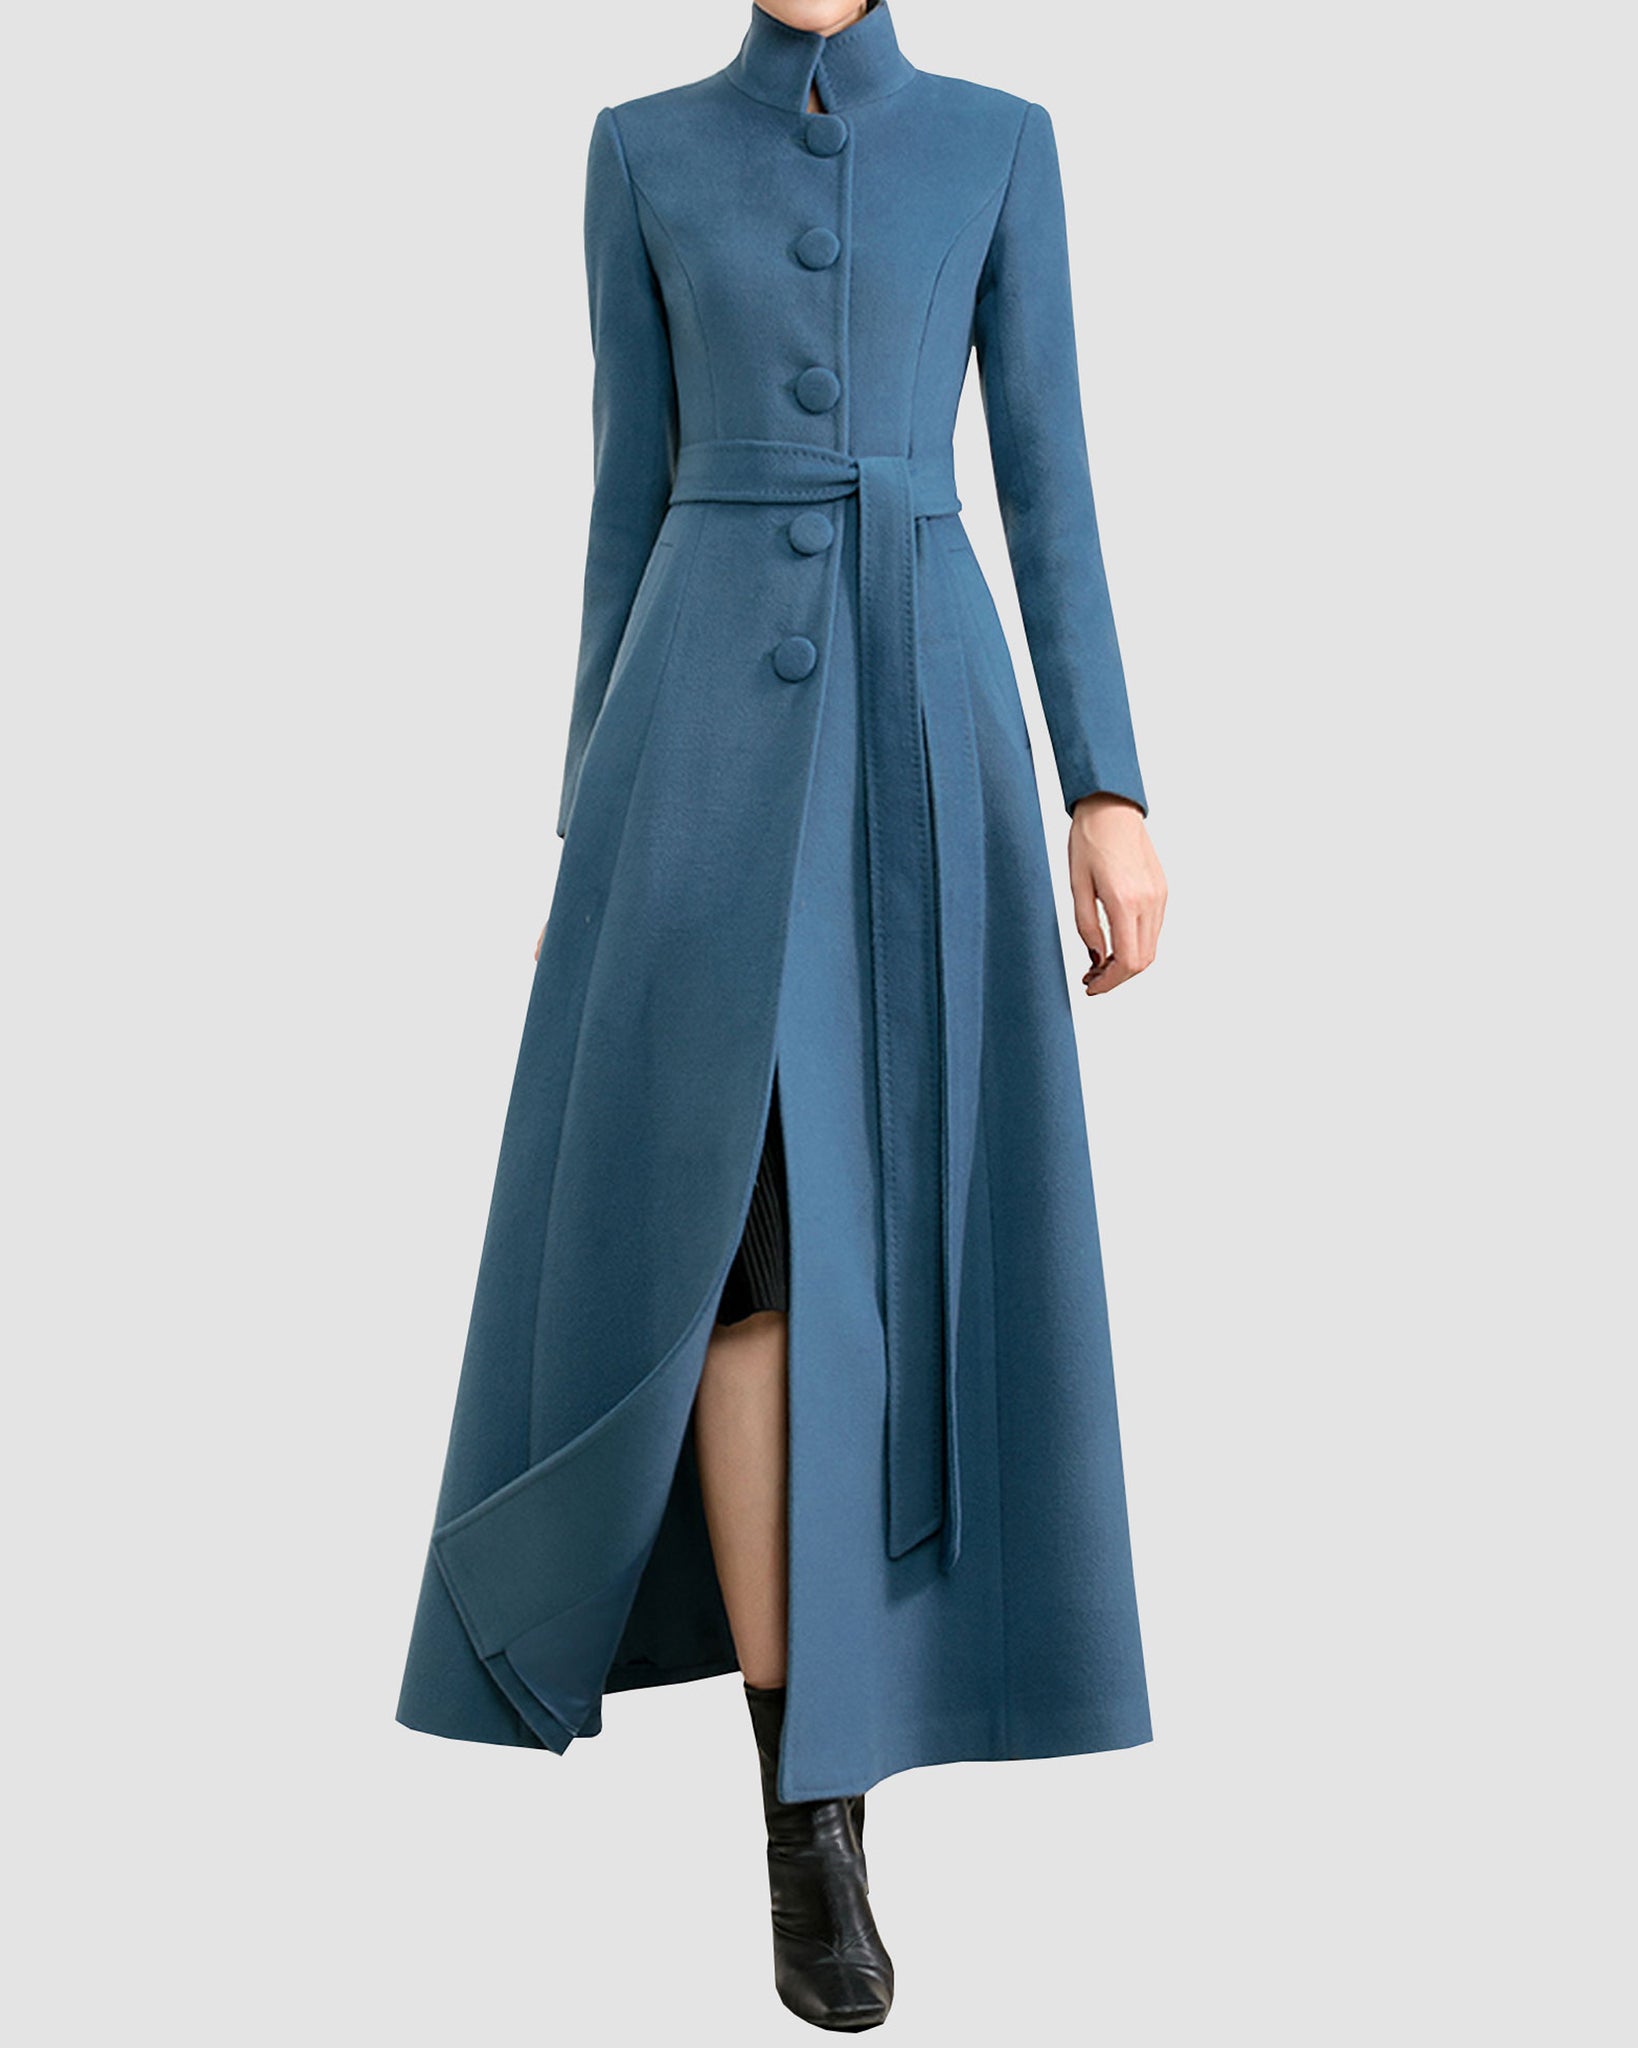 Women wool coat, winter coat, long jacket, jacket with belt, coat